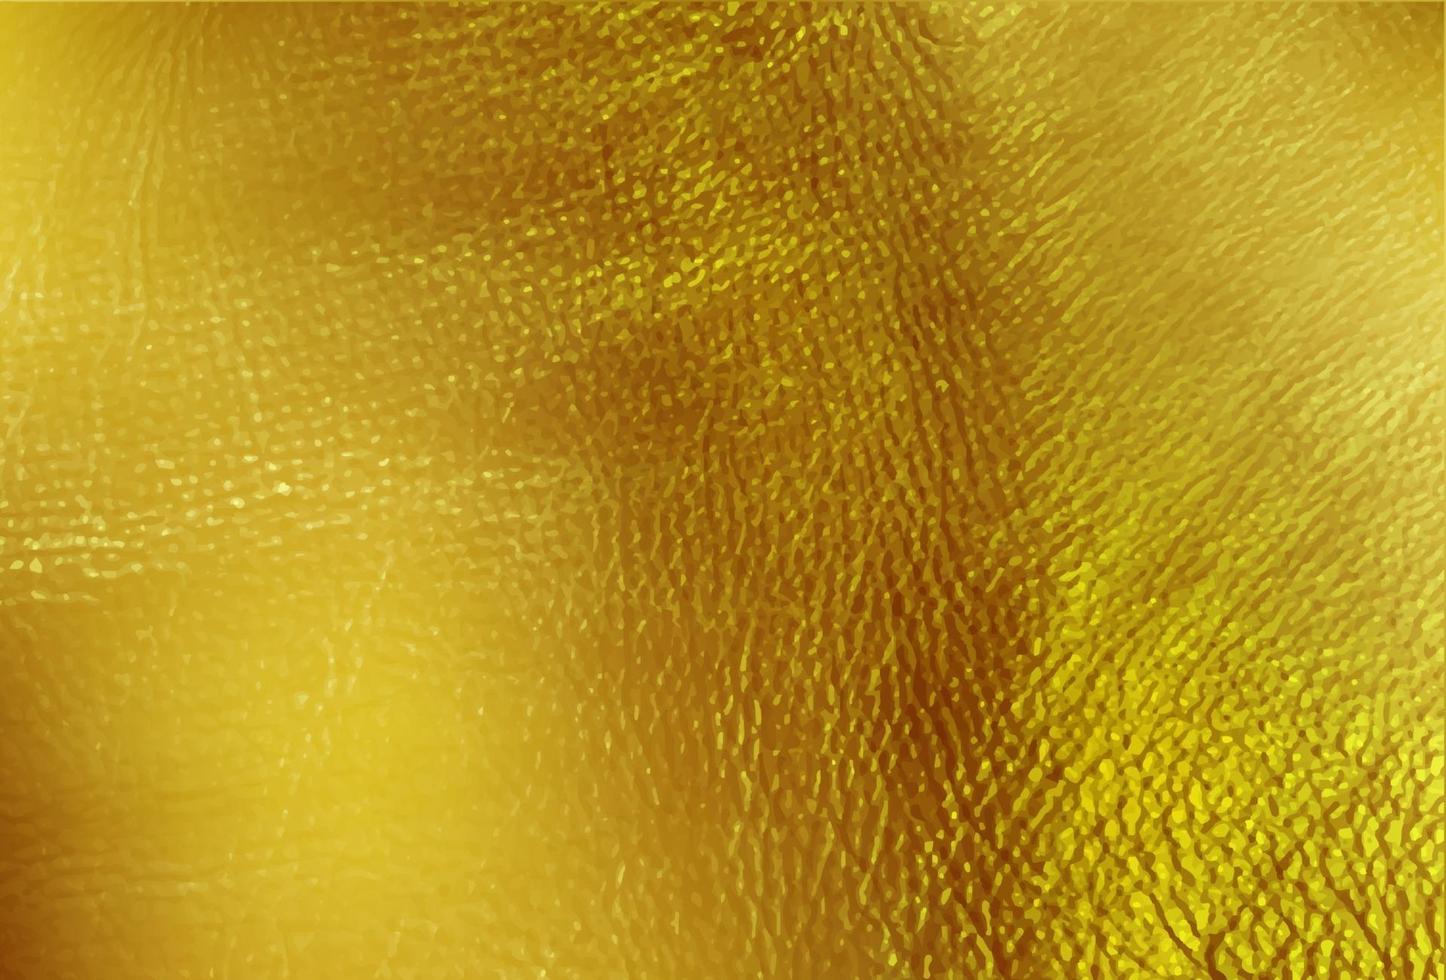 Shiny gold texture foil paper or metal vector